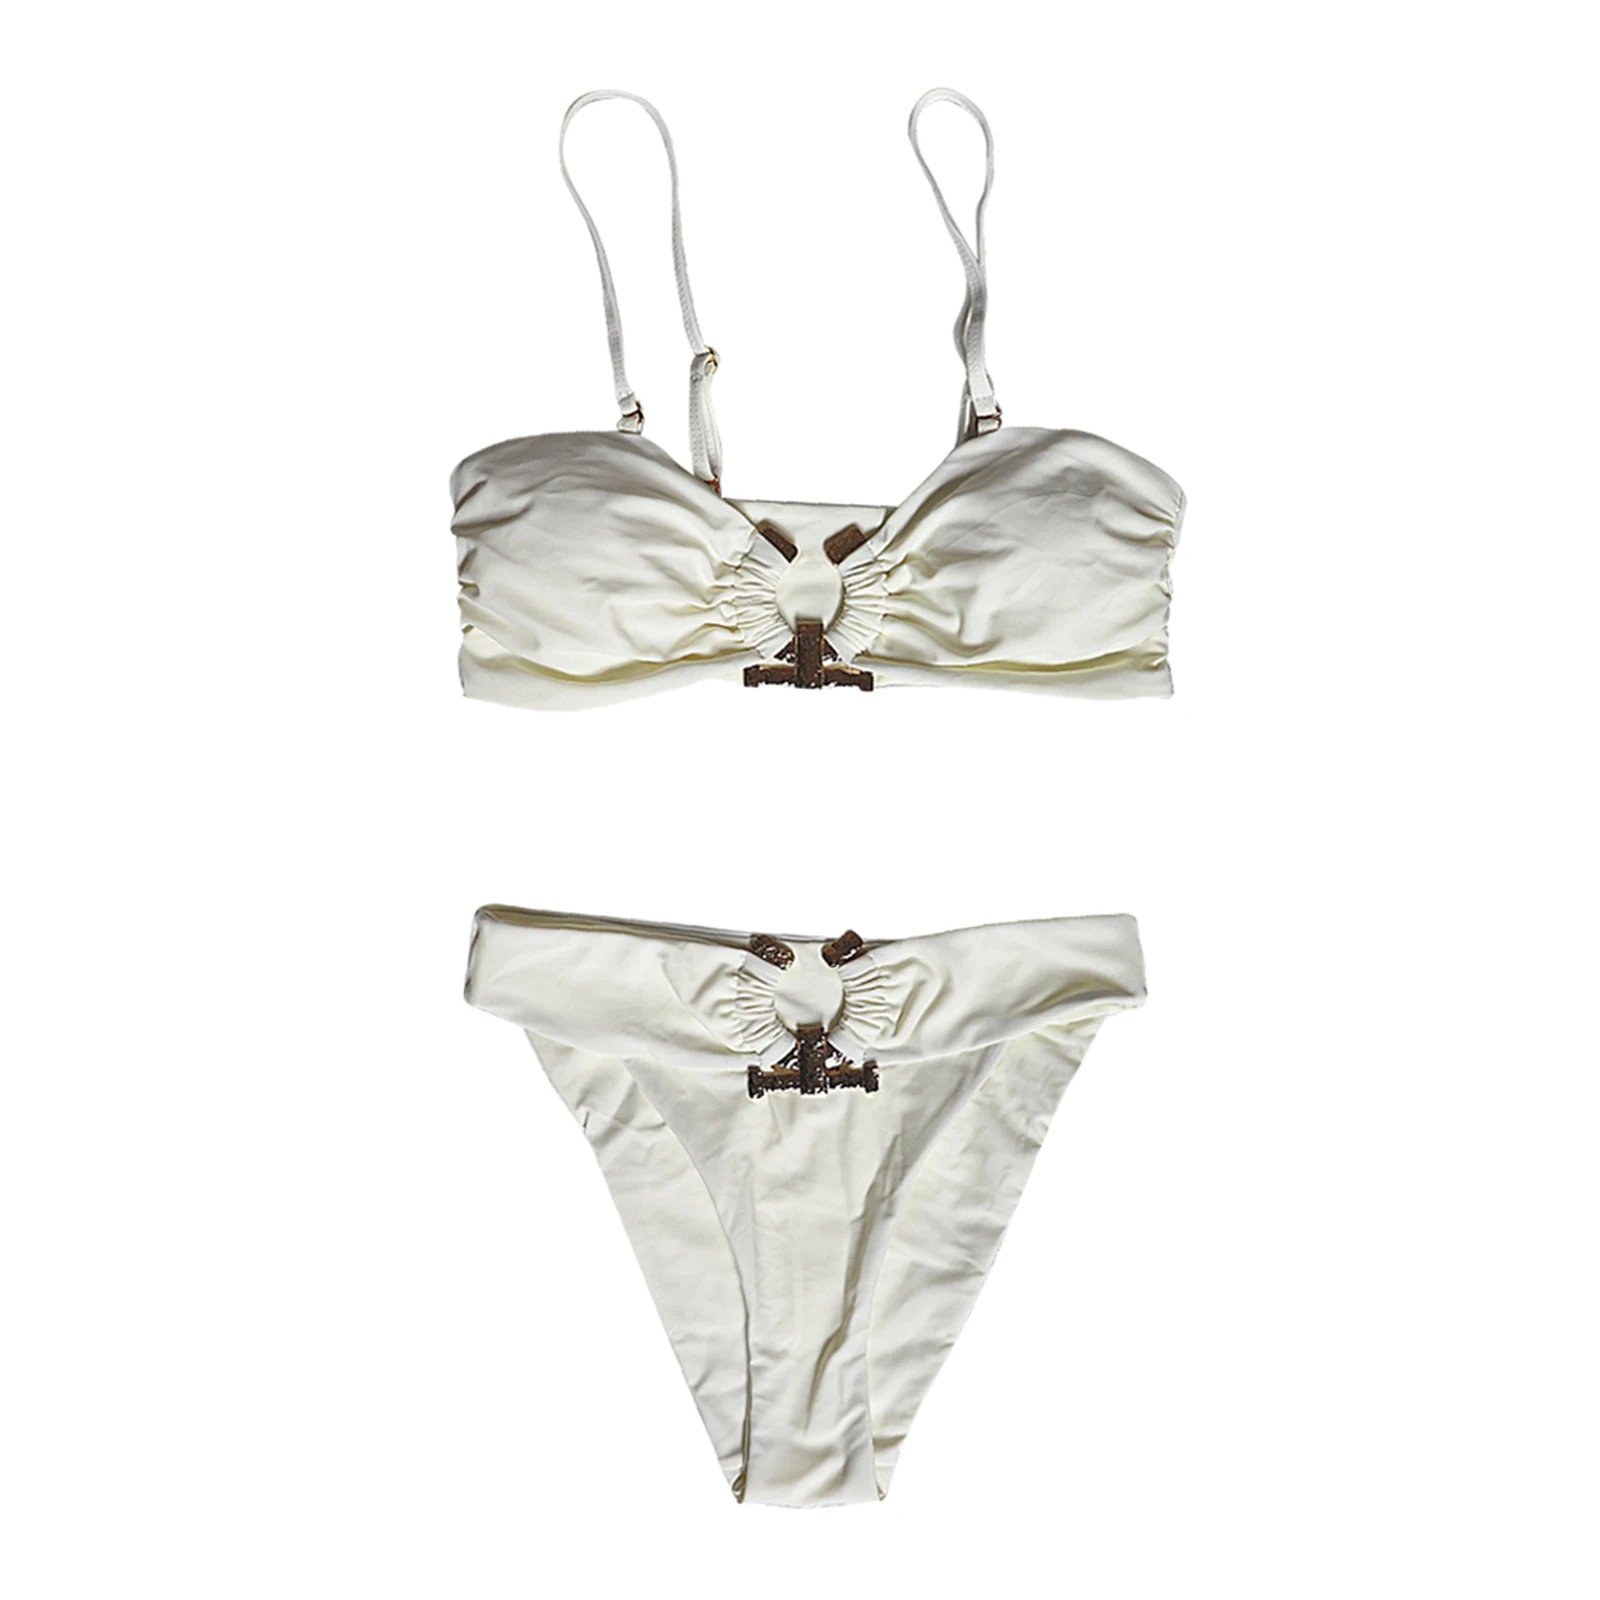 Two-piece Bikini Set Padded Cup Bra Bottom Swimwear Bathing Suit Tankini Female Swim Pool Bather Triangle Suit Beachwear Tankini